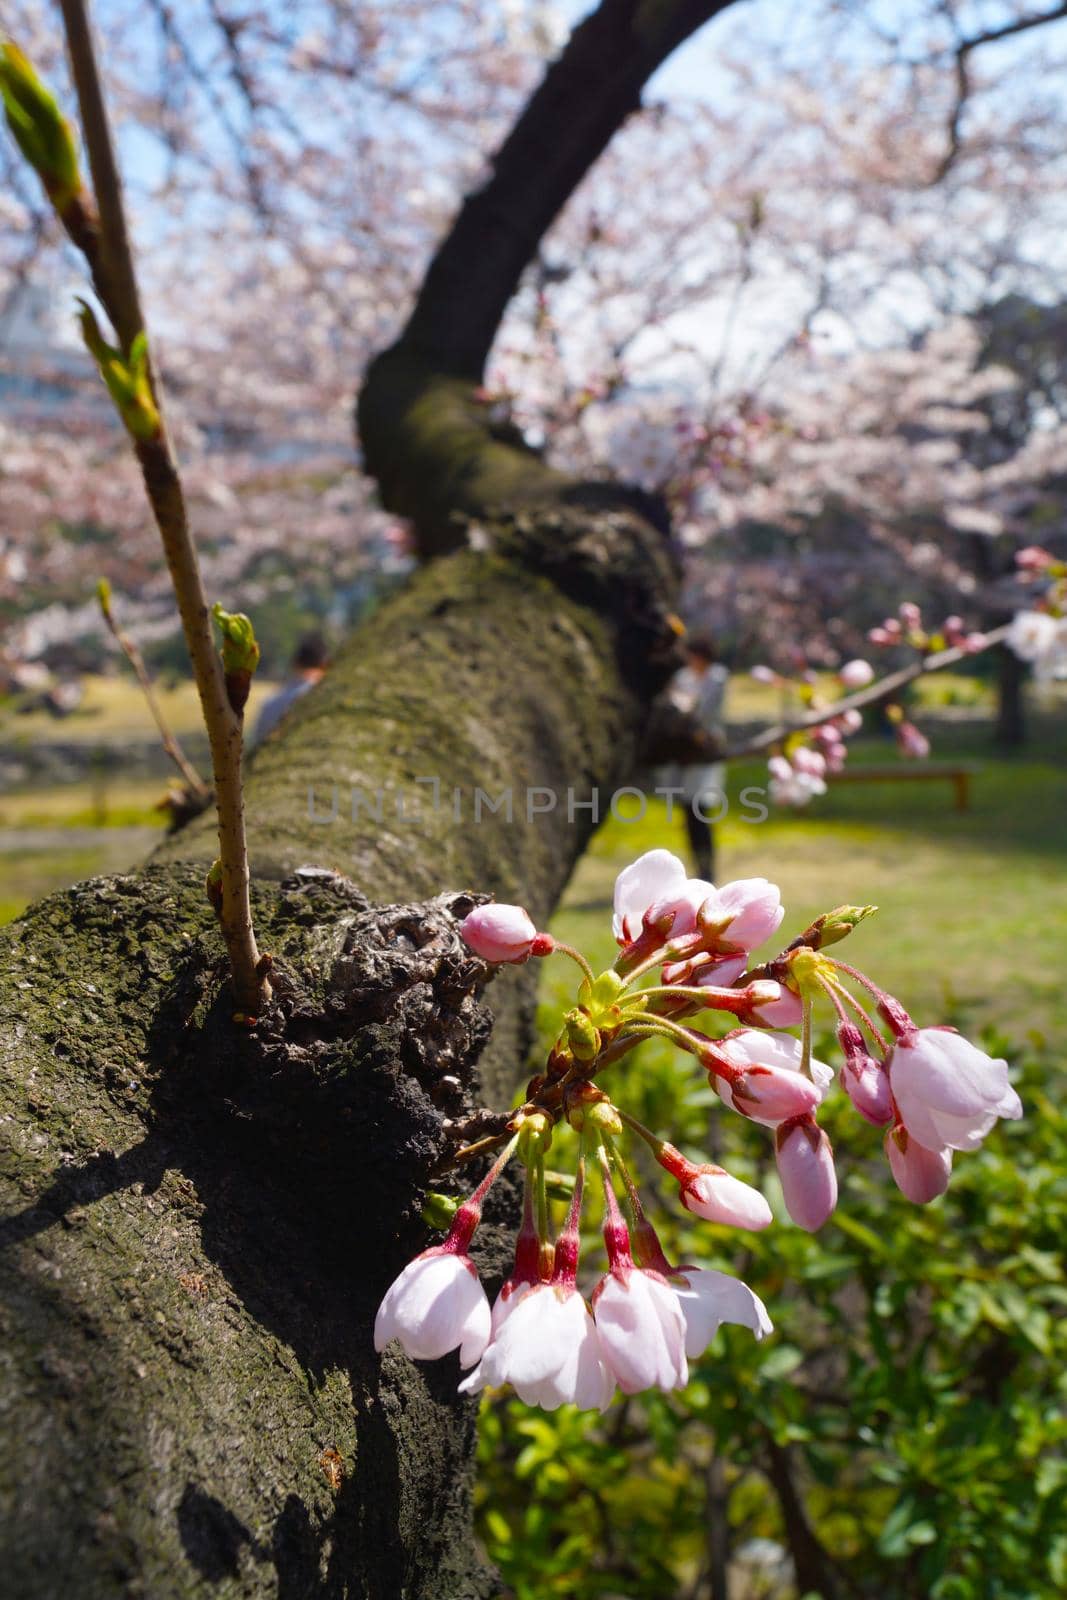 Cherry blossom image. Shooting Location: Tokyo metropolitan area